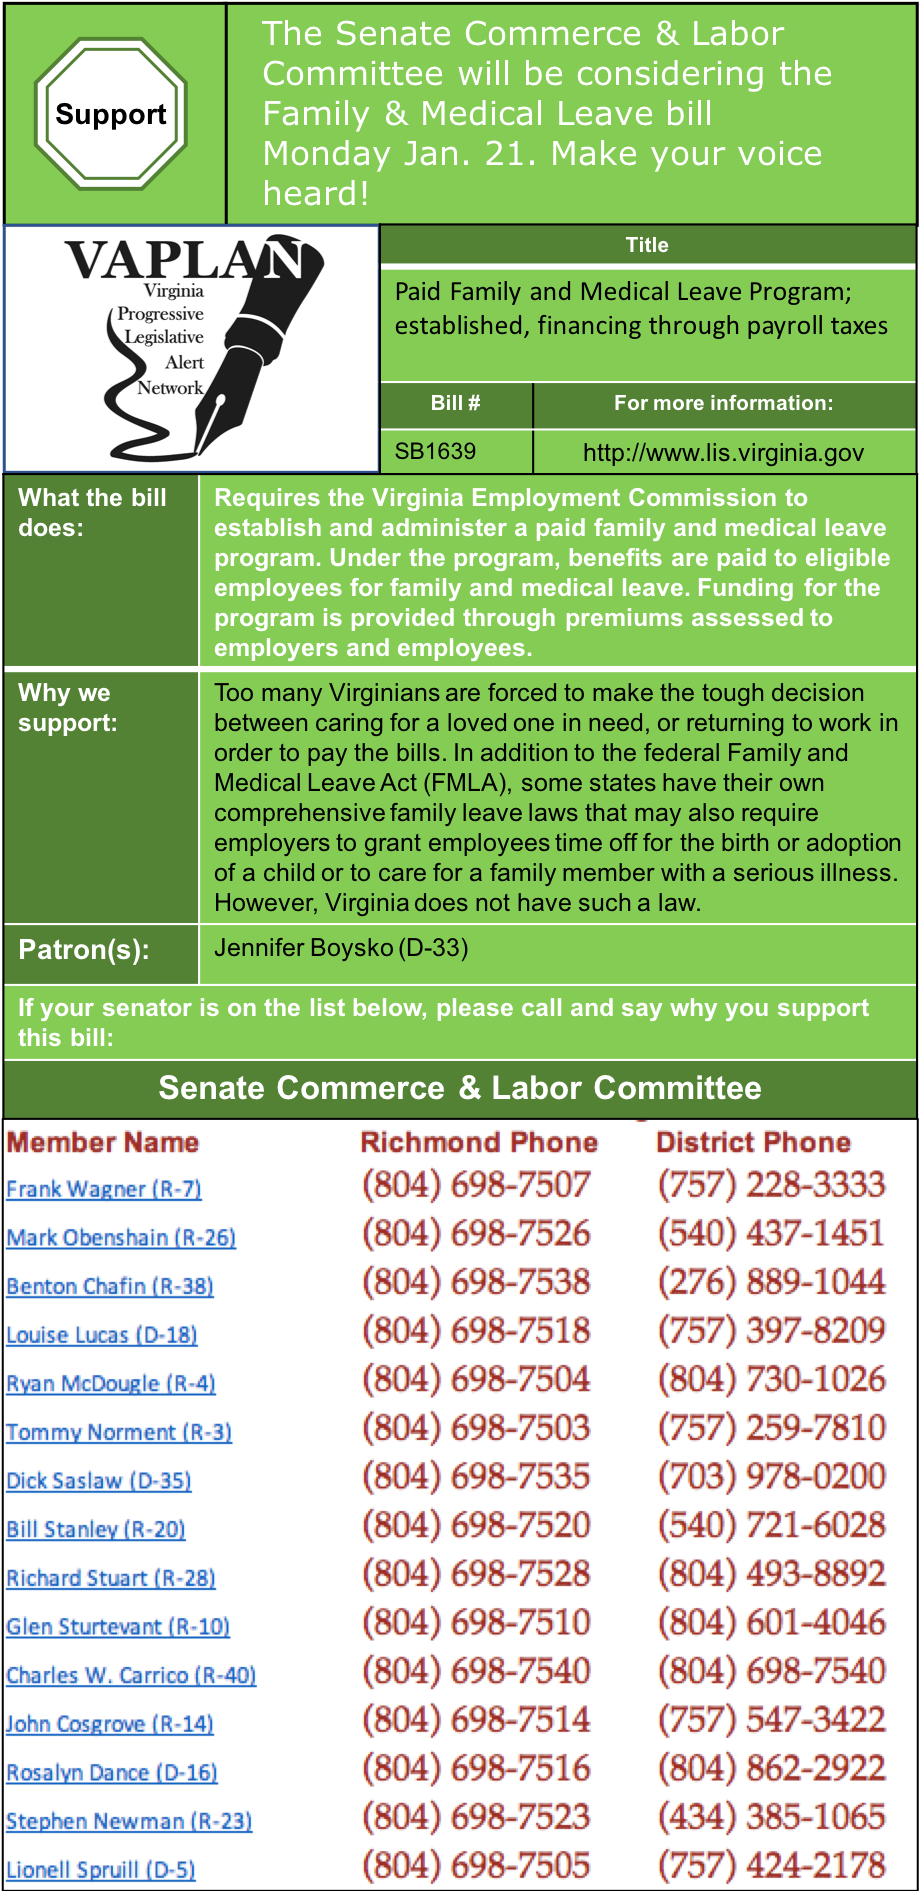 UPDATE: Senate Commerce & Labor to consider Virginia Family & Medical Leave program Monday Jan. 28